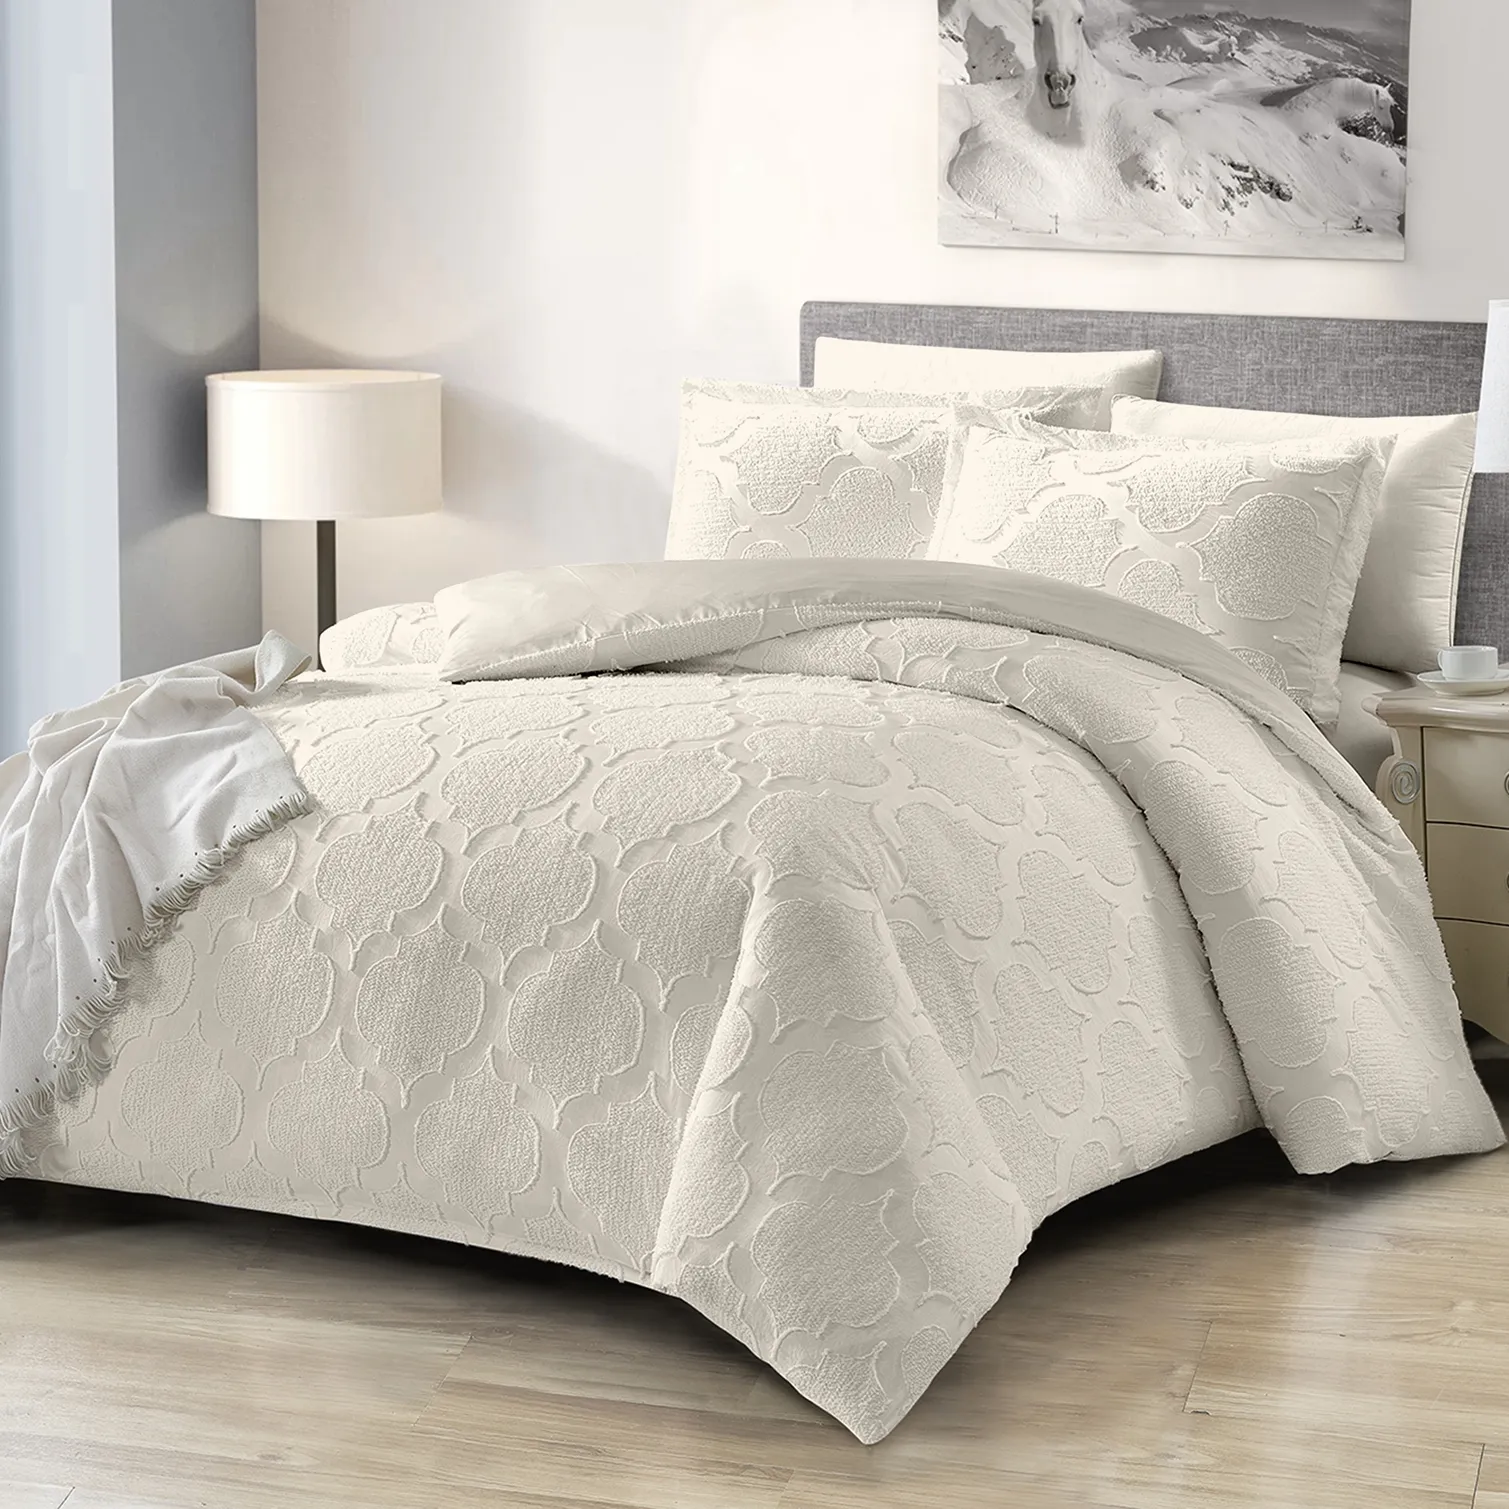 King Size Comforter Bedding Sets Dubai Market Duvet Cover Set